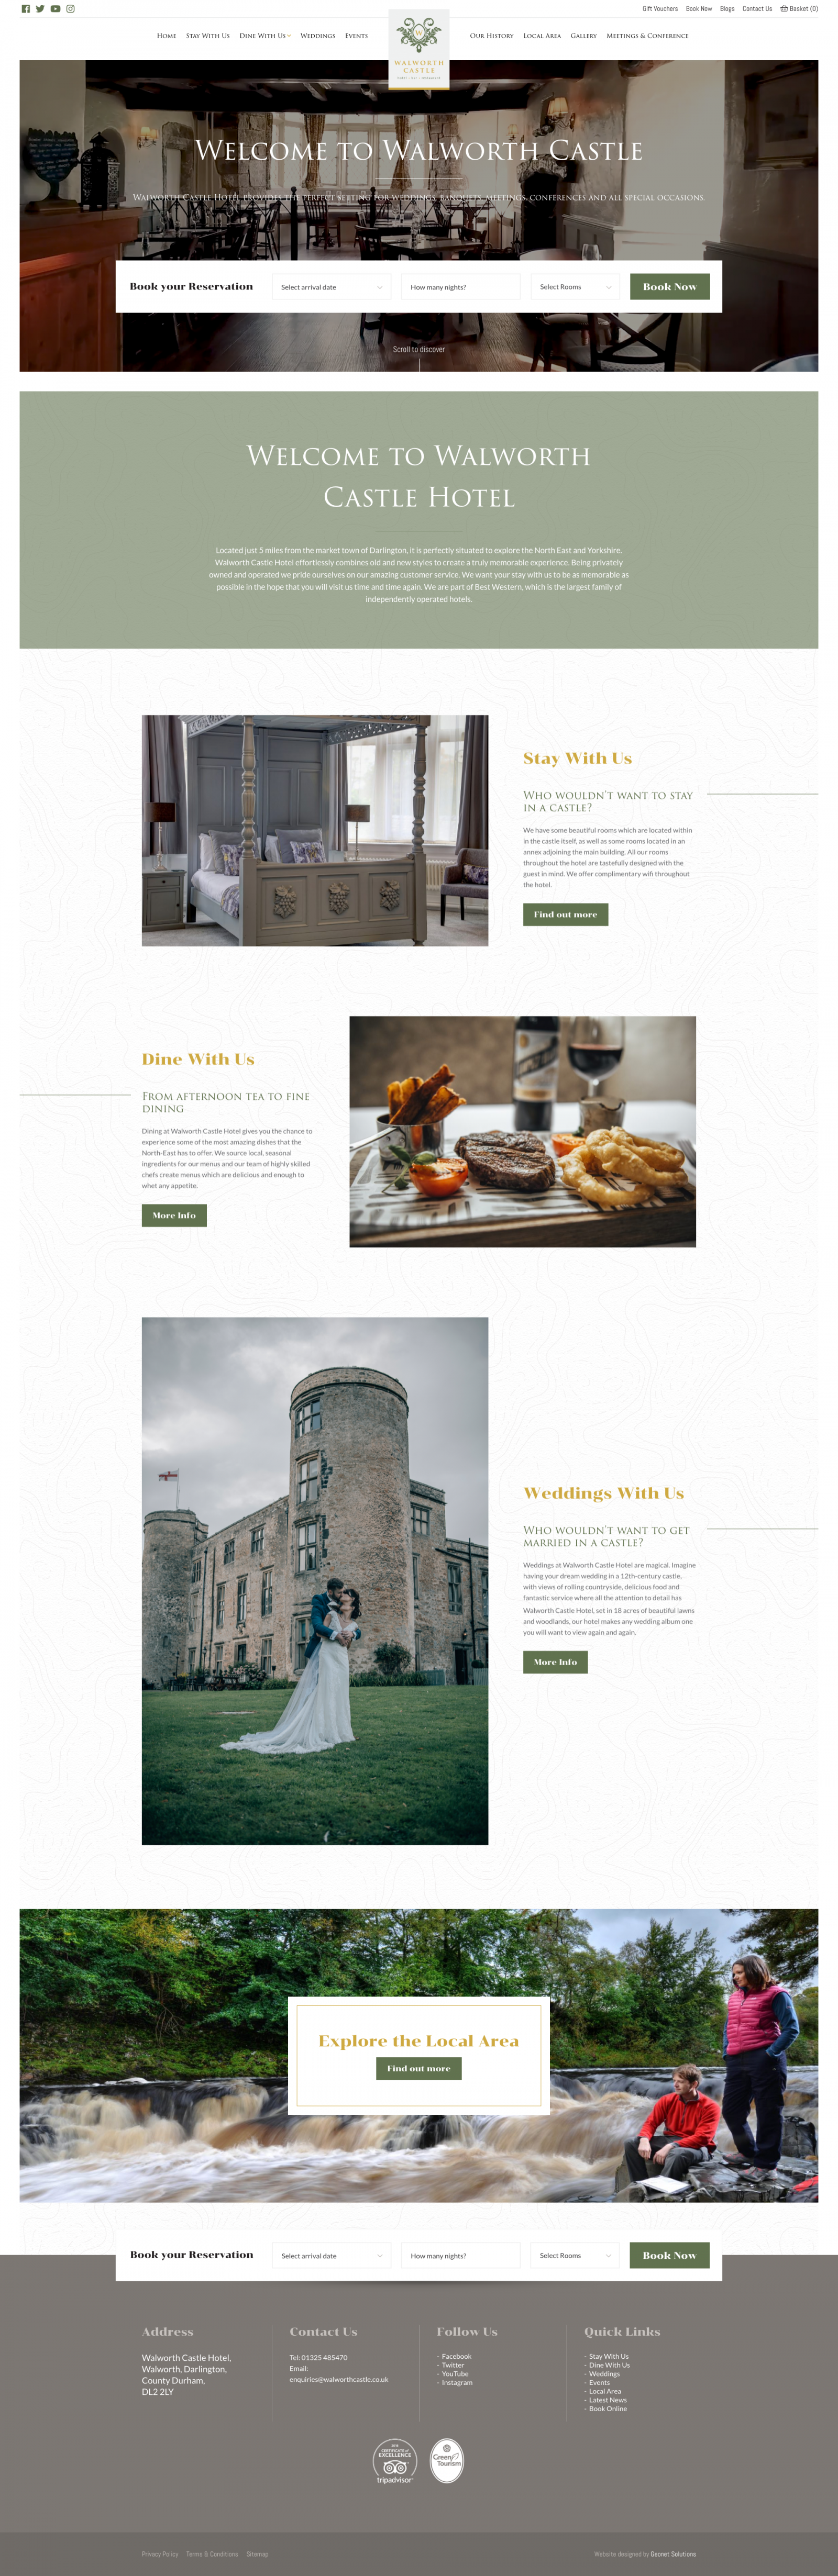 Walworth Castle | Hush Digital | Web Design Darlington